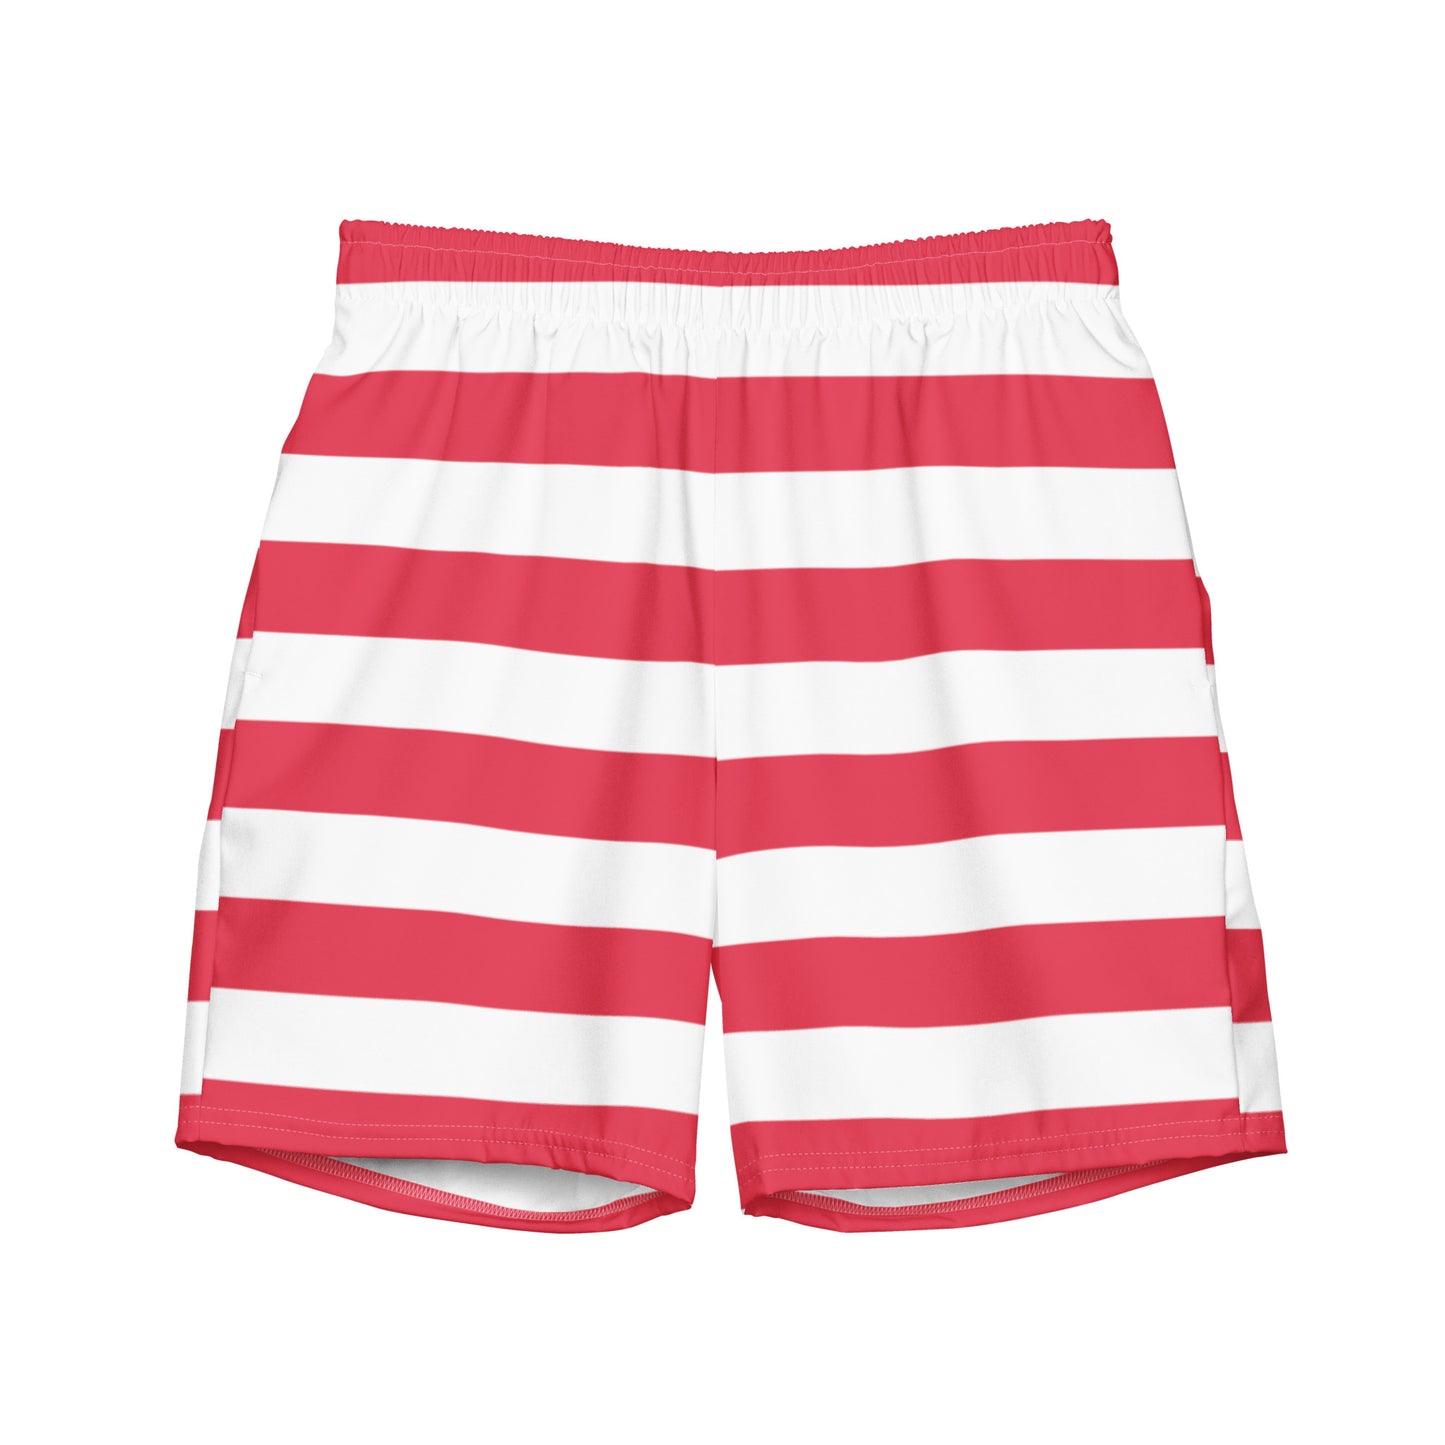 Sailor Red - Sustainably Made Men's swim trunks